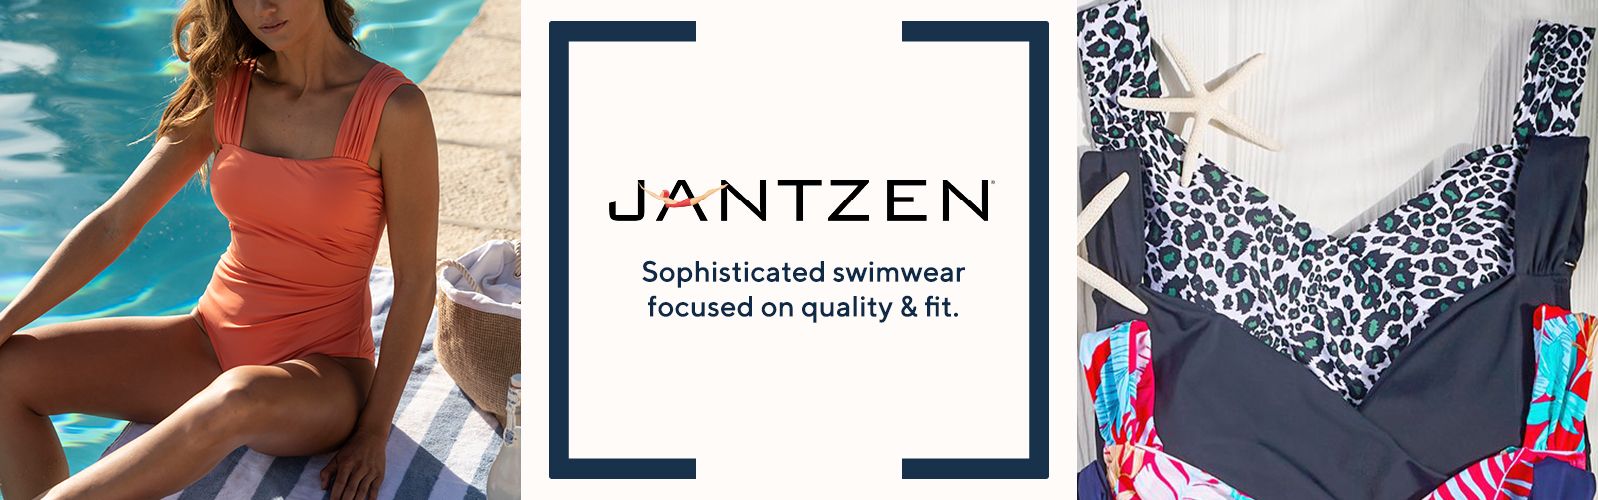 Jantzen.  Sophisticated swimwear focused on quality & fit.